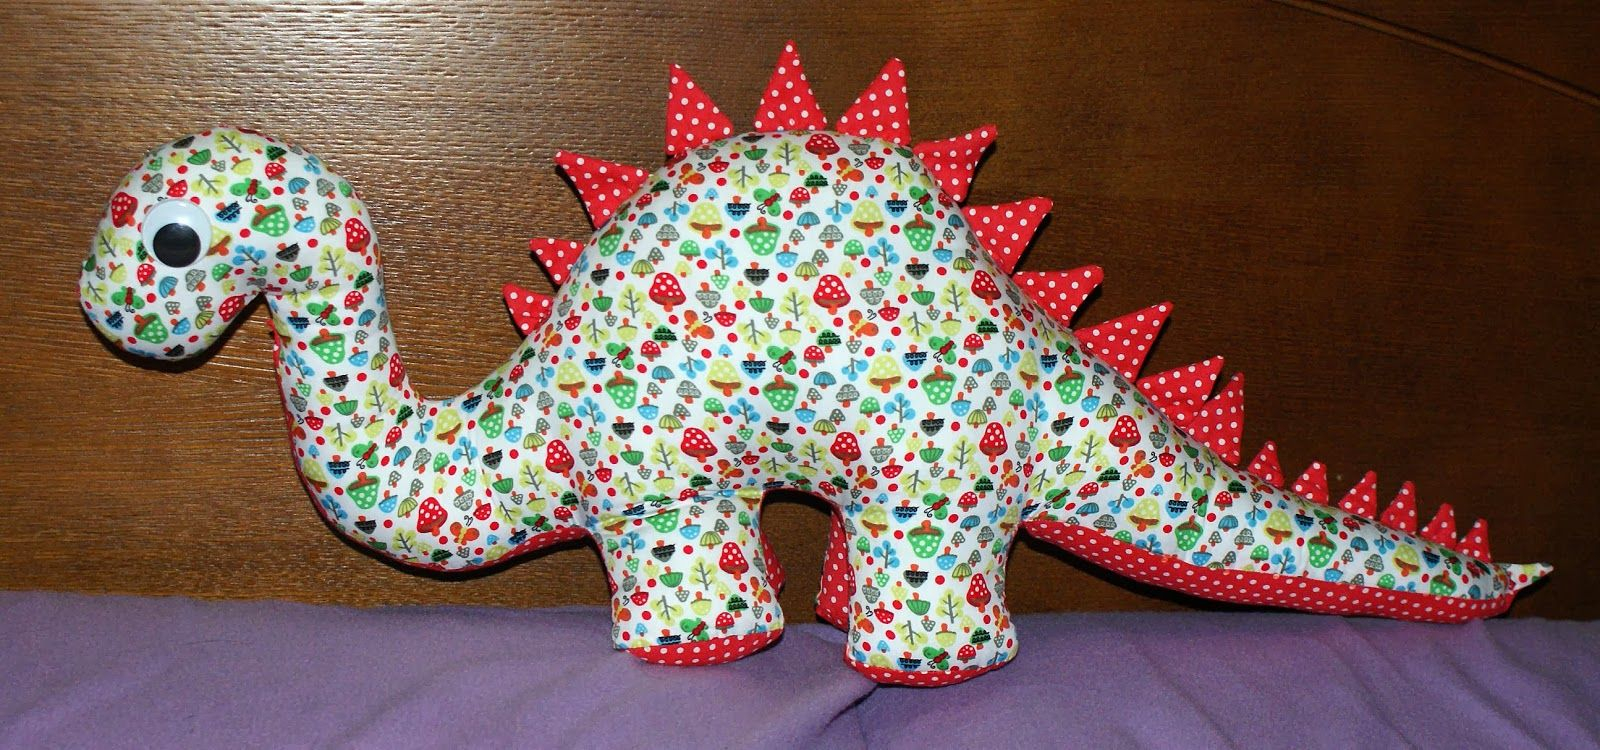 dinosaur-sewing-pattern-free-templates-free-sewing-patterns-great